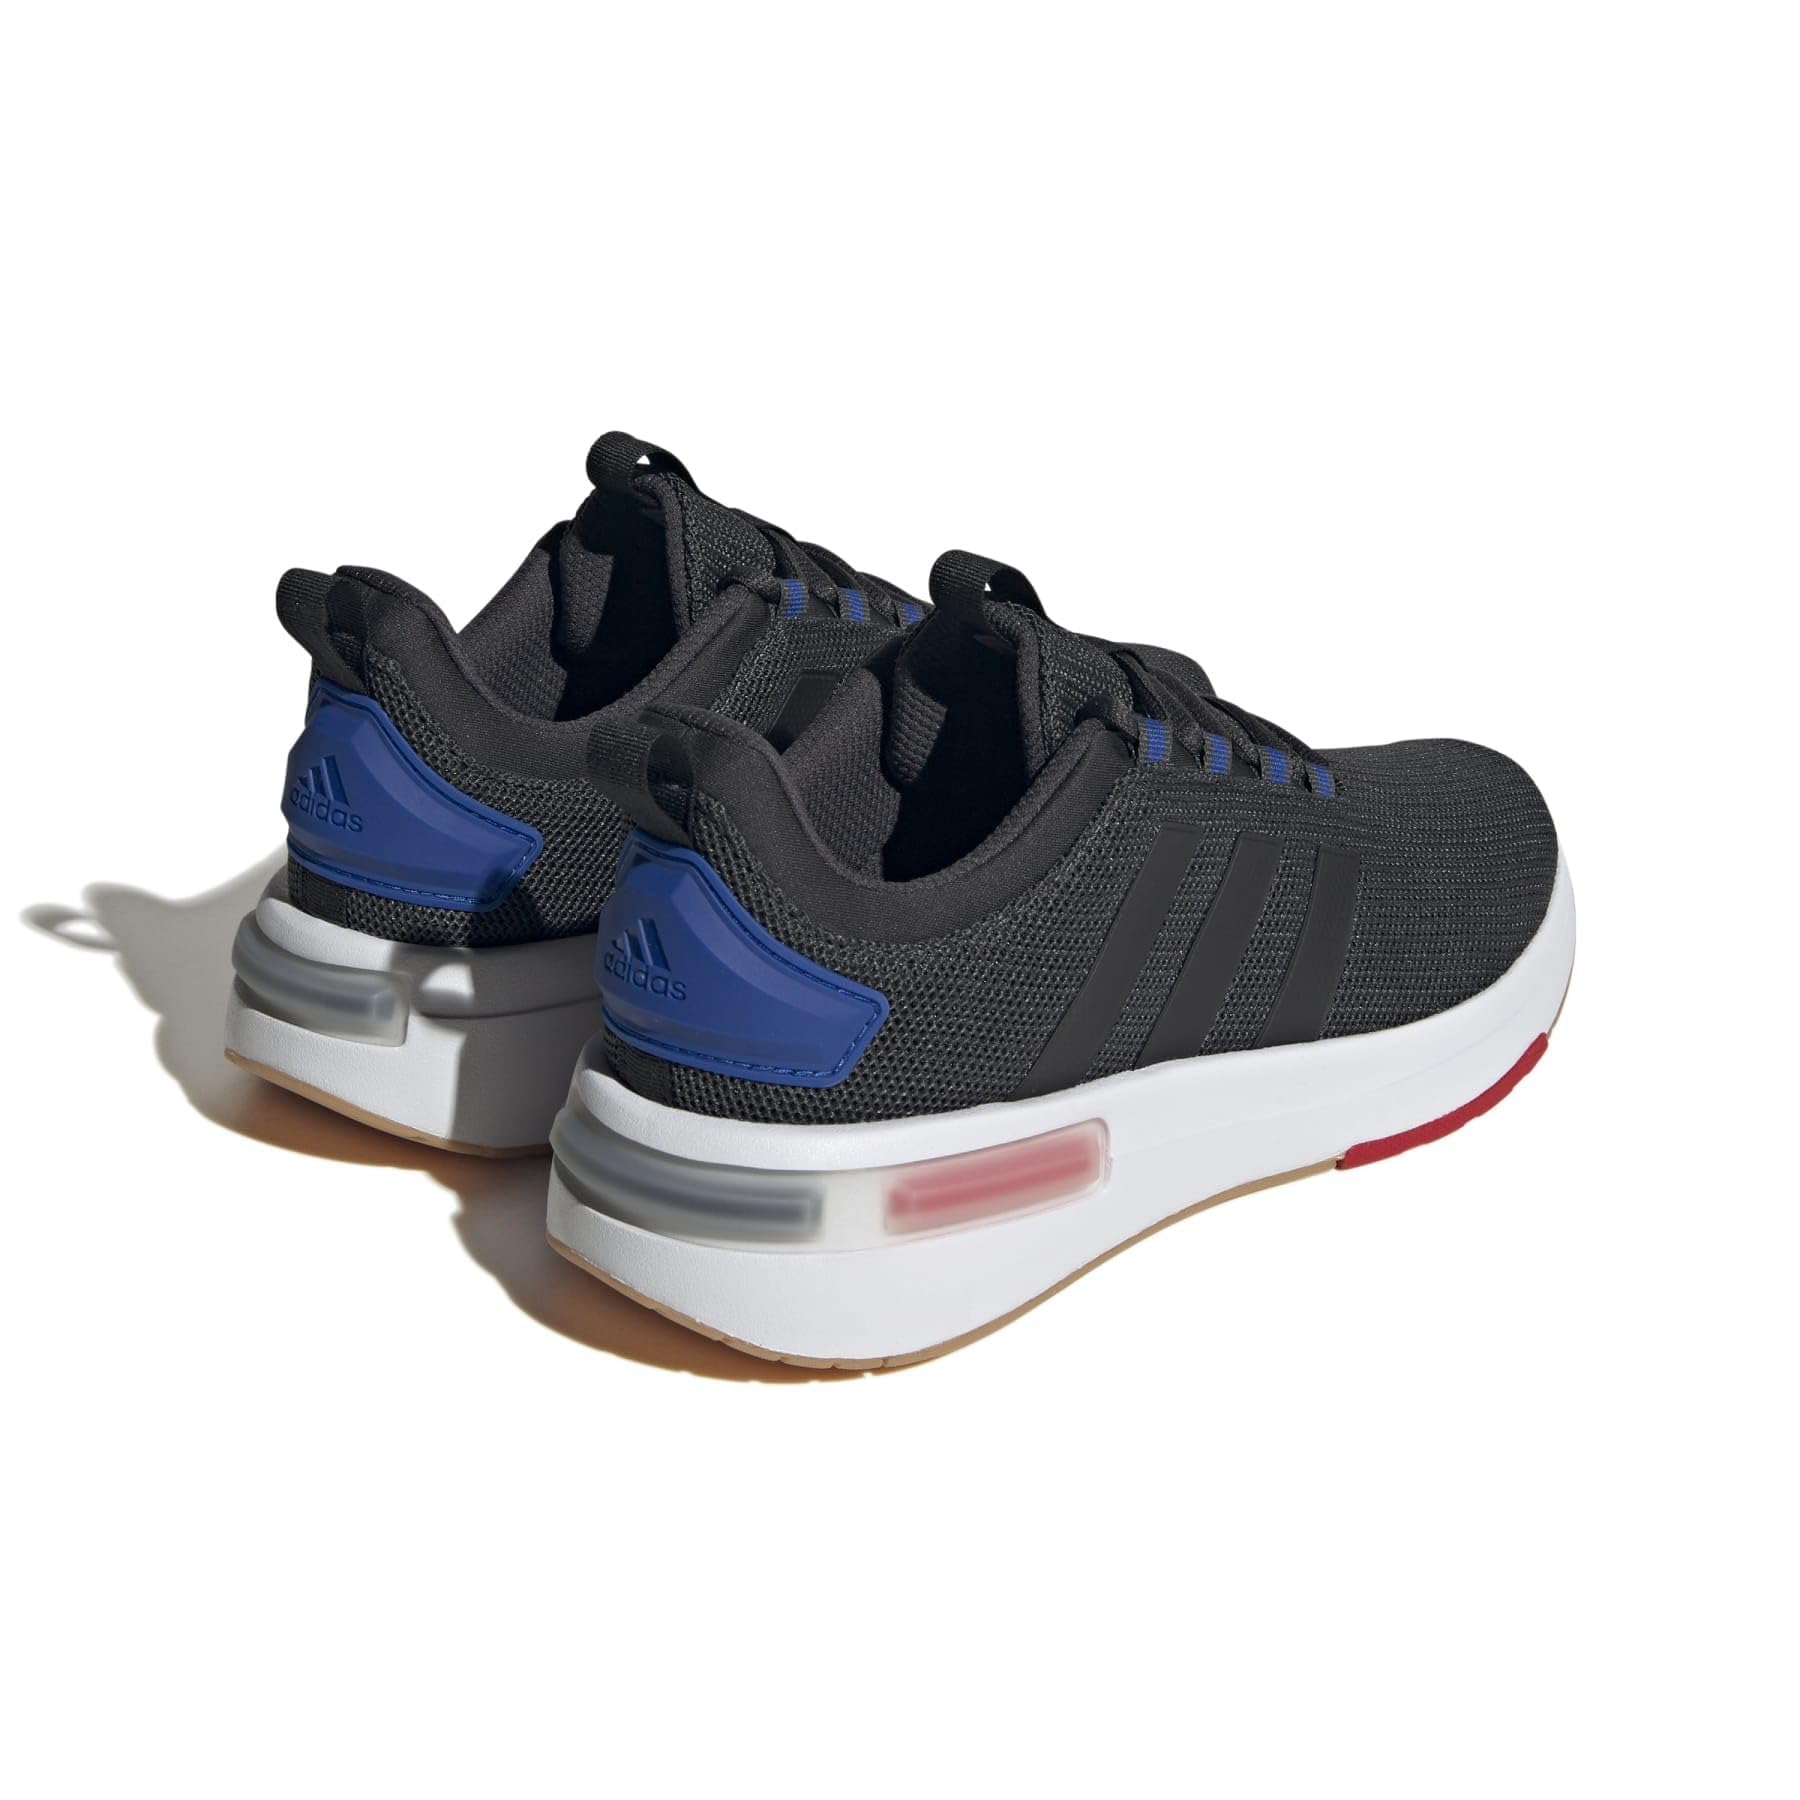 adidas Men's Racer TR23 Sneaker, Carbon/Black/Team Royal Blue, 8.5